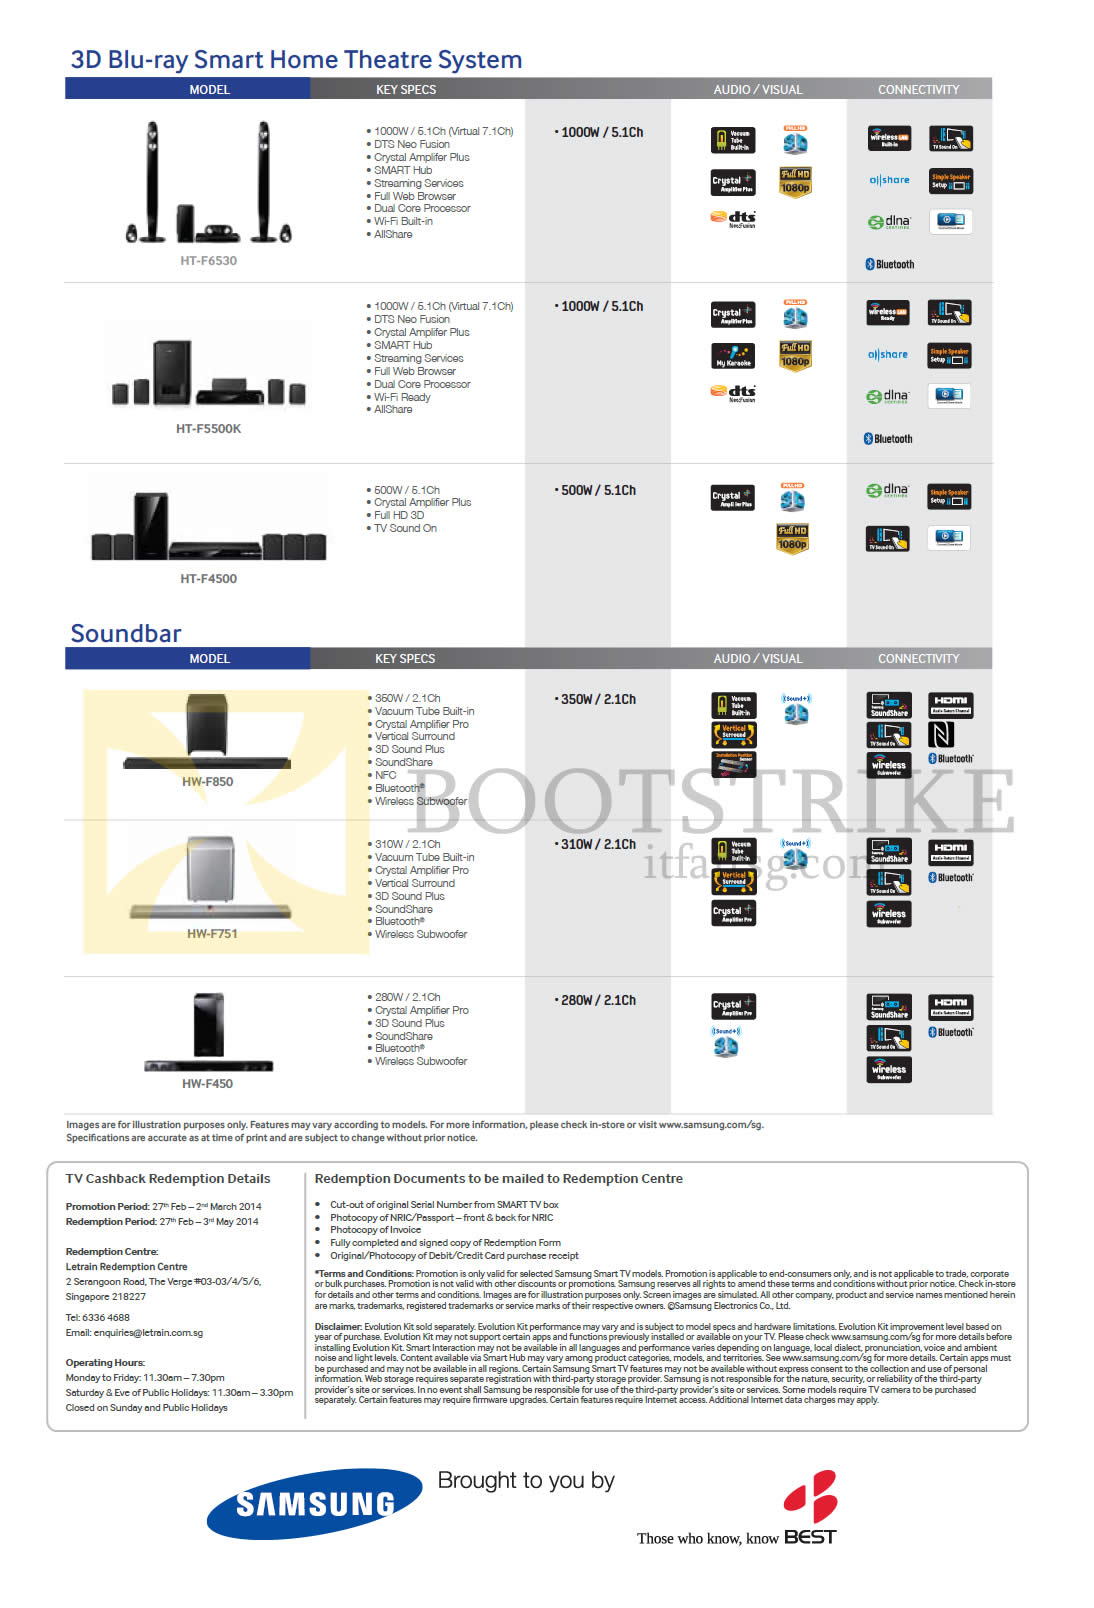 IT SHOW 2014 price list image brochure of Samsung Best Denki (No Prices) Home Theatre Systems, Soundbars, HT-F6530, F5500K, F4500, HW-F850, F751, F450